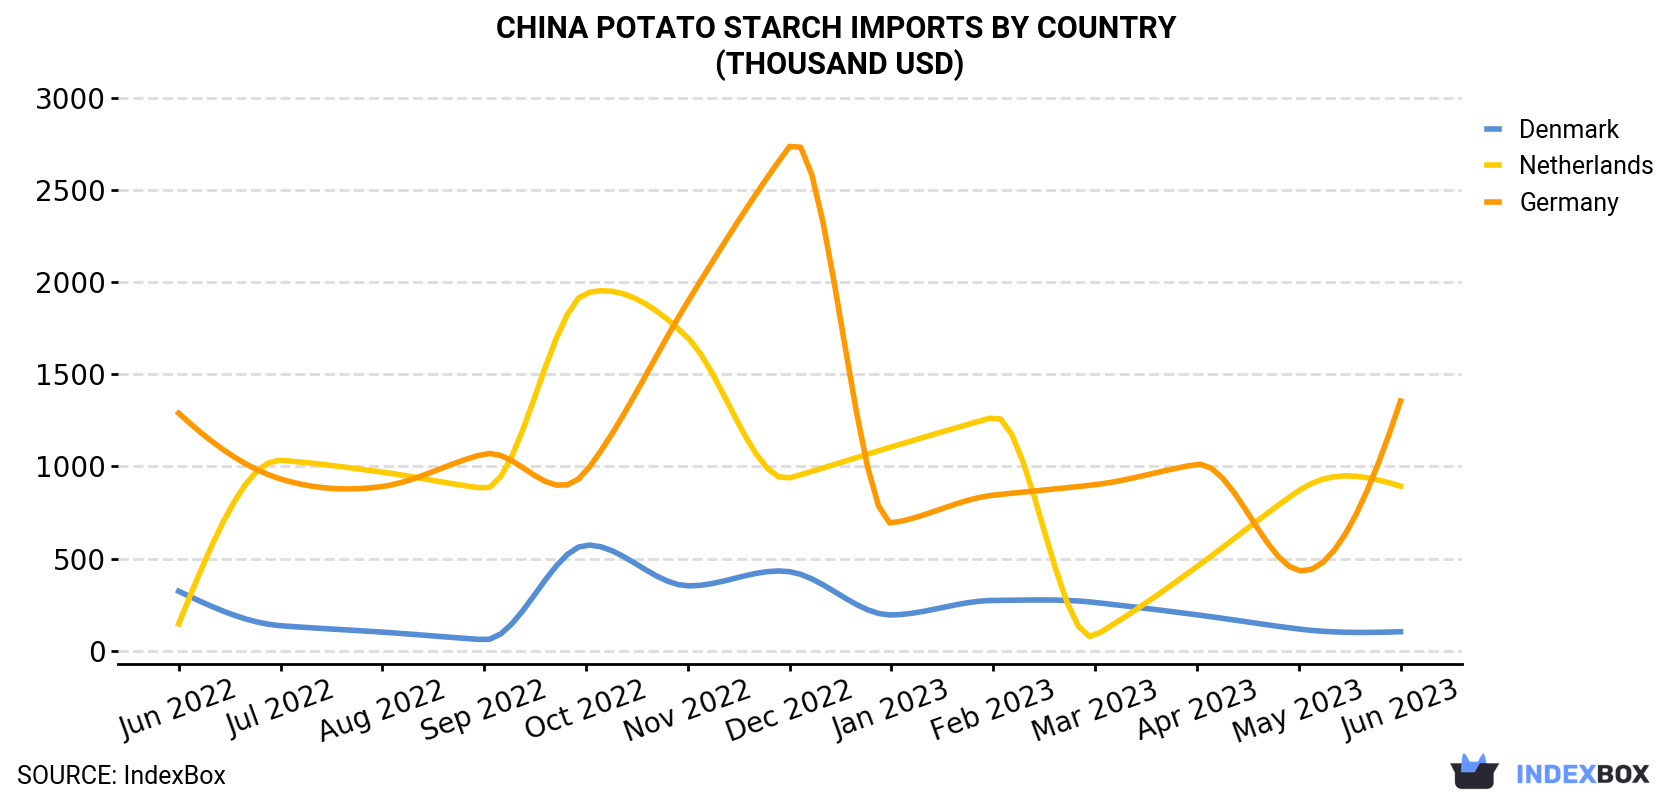 China Potato Starch Imports By Country (Thousand USD)